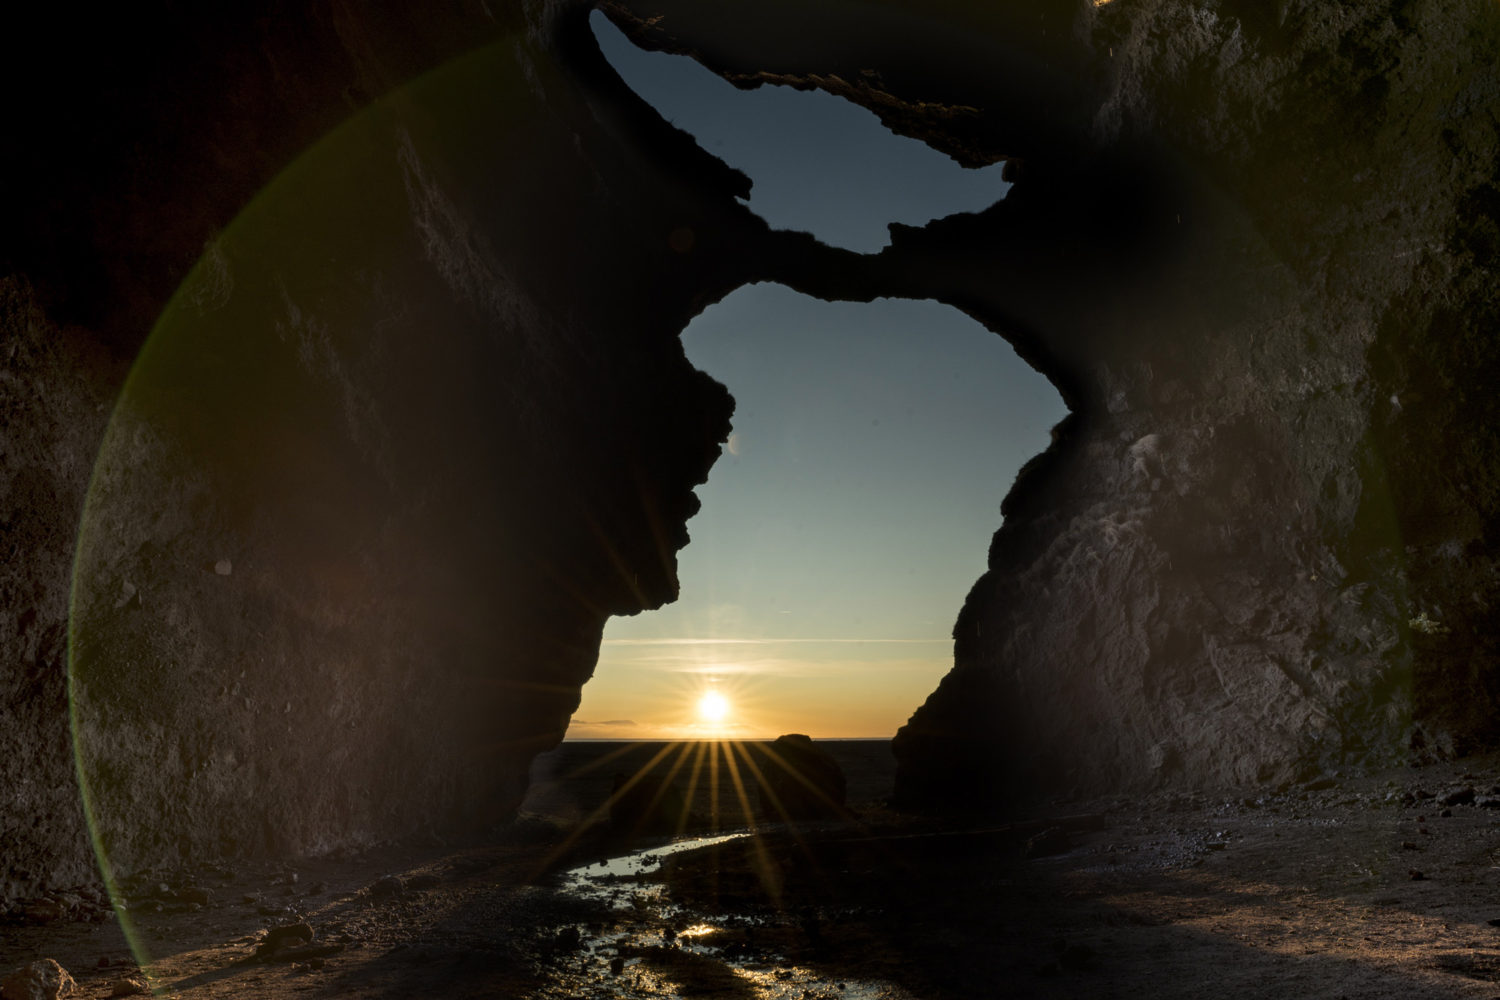 Inside Yoda Cave at sunset.